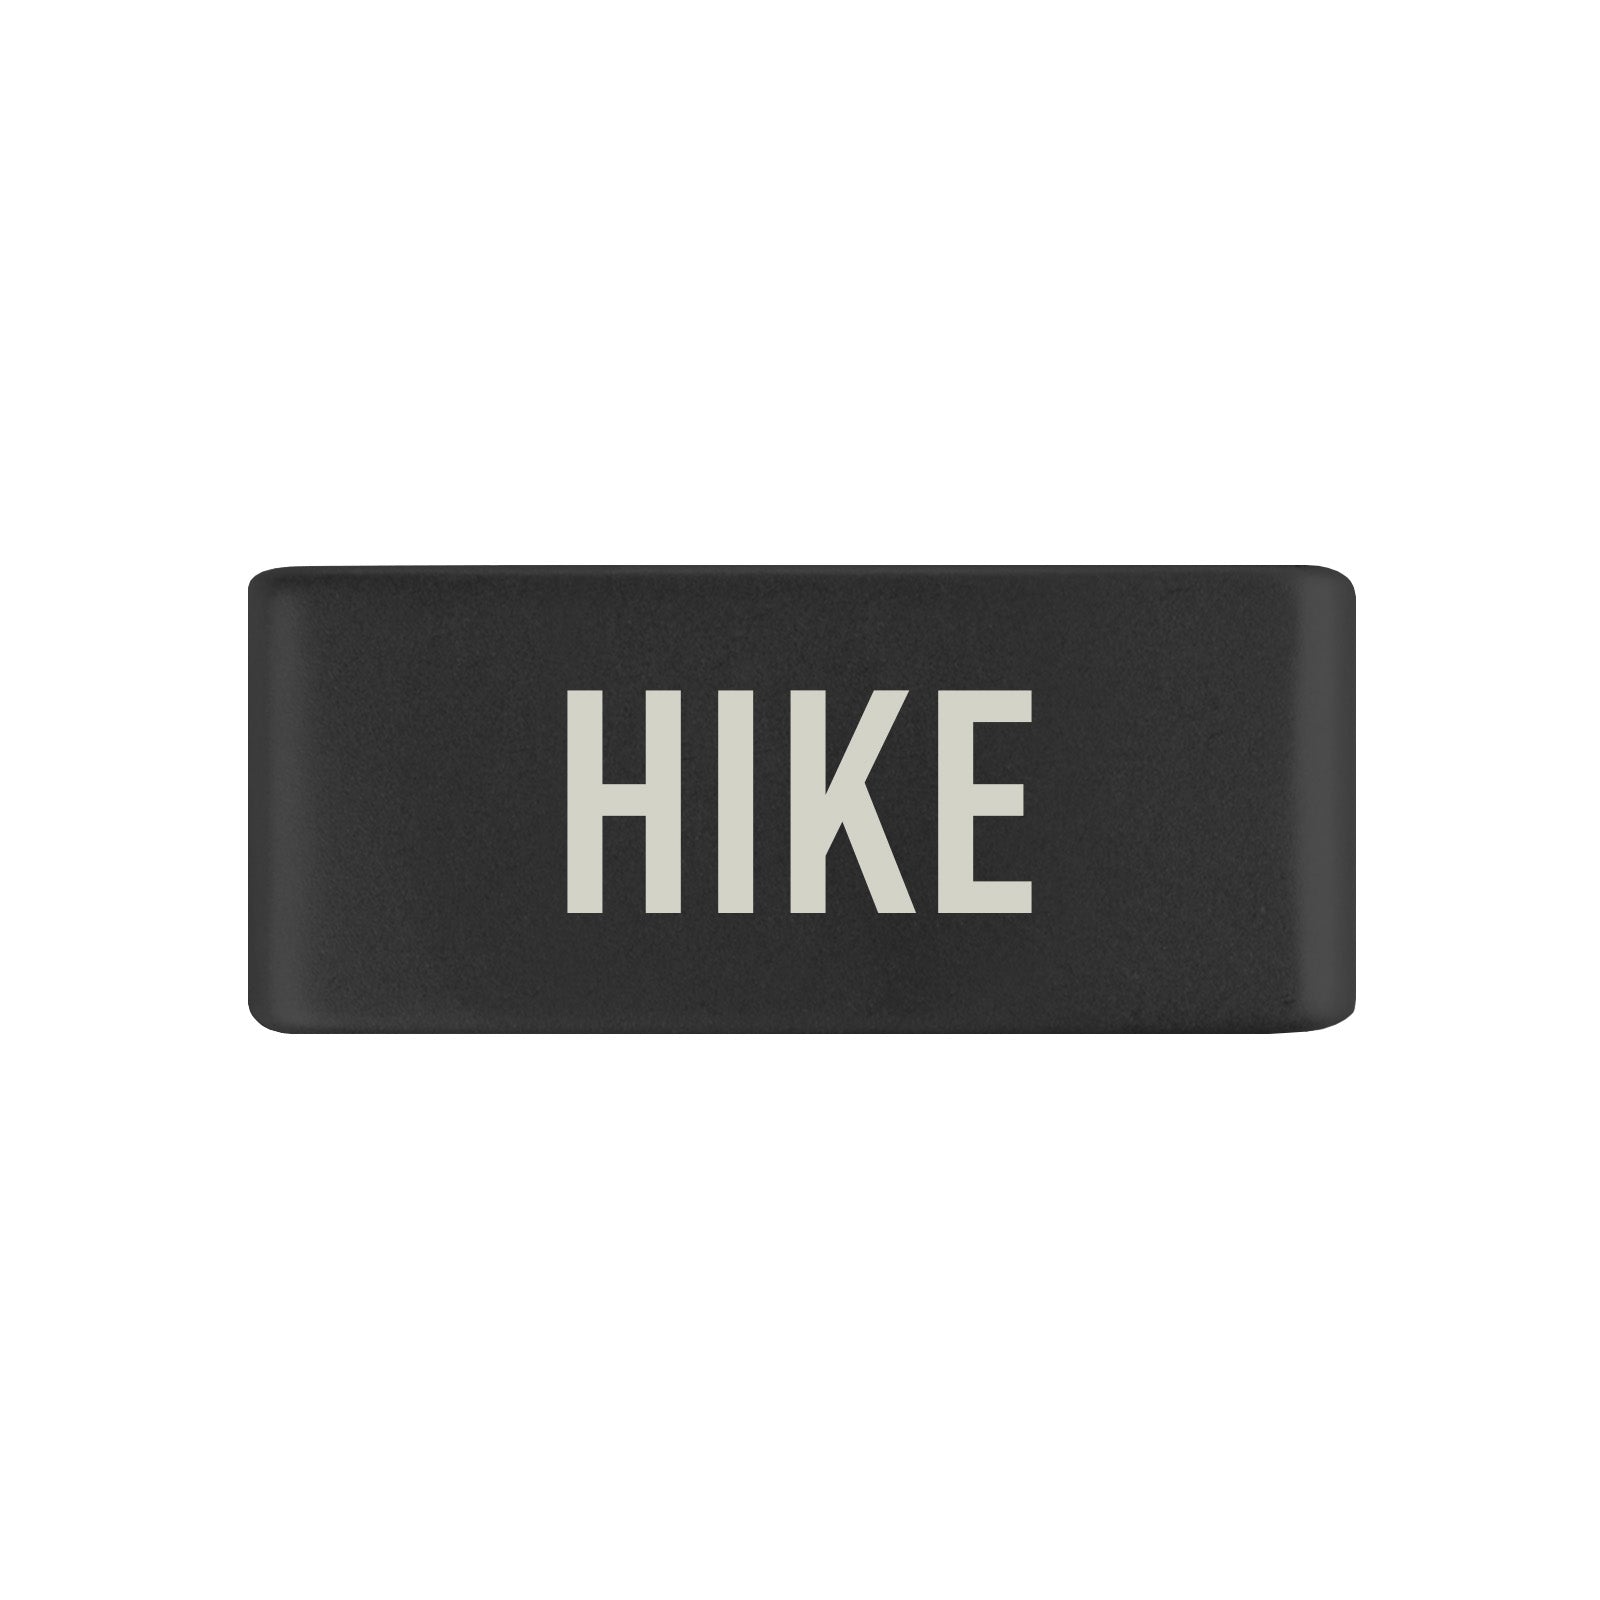 Hike Badge Badge 13mm - ROAD iD